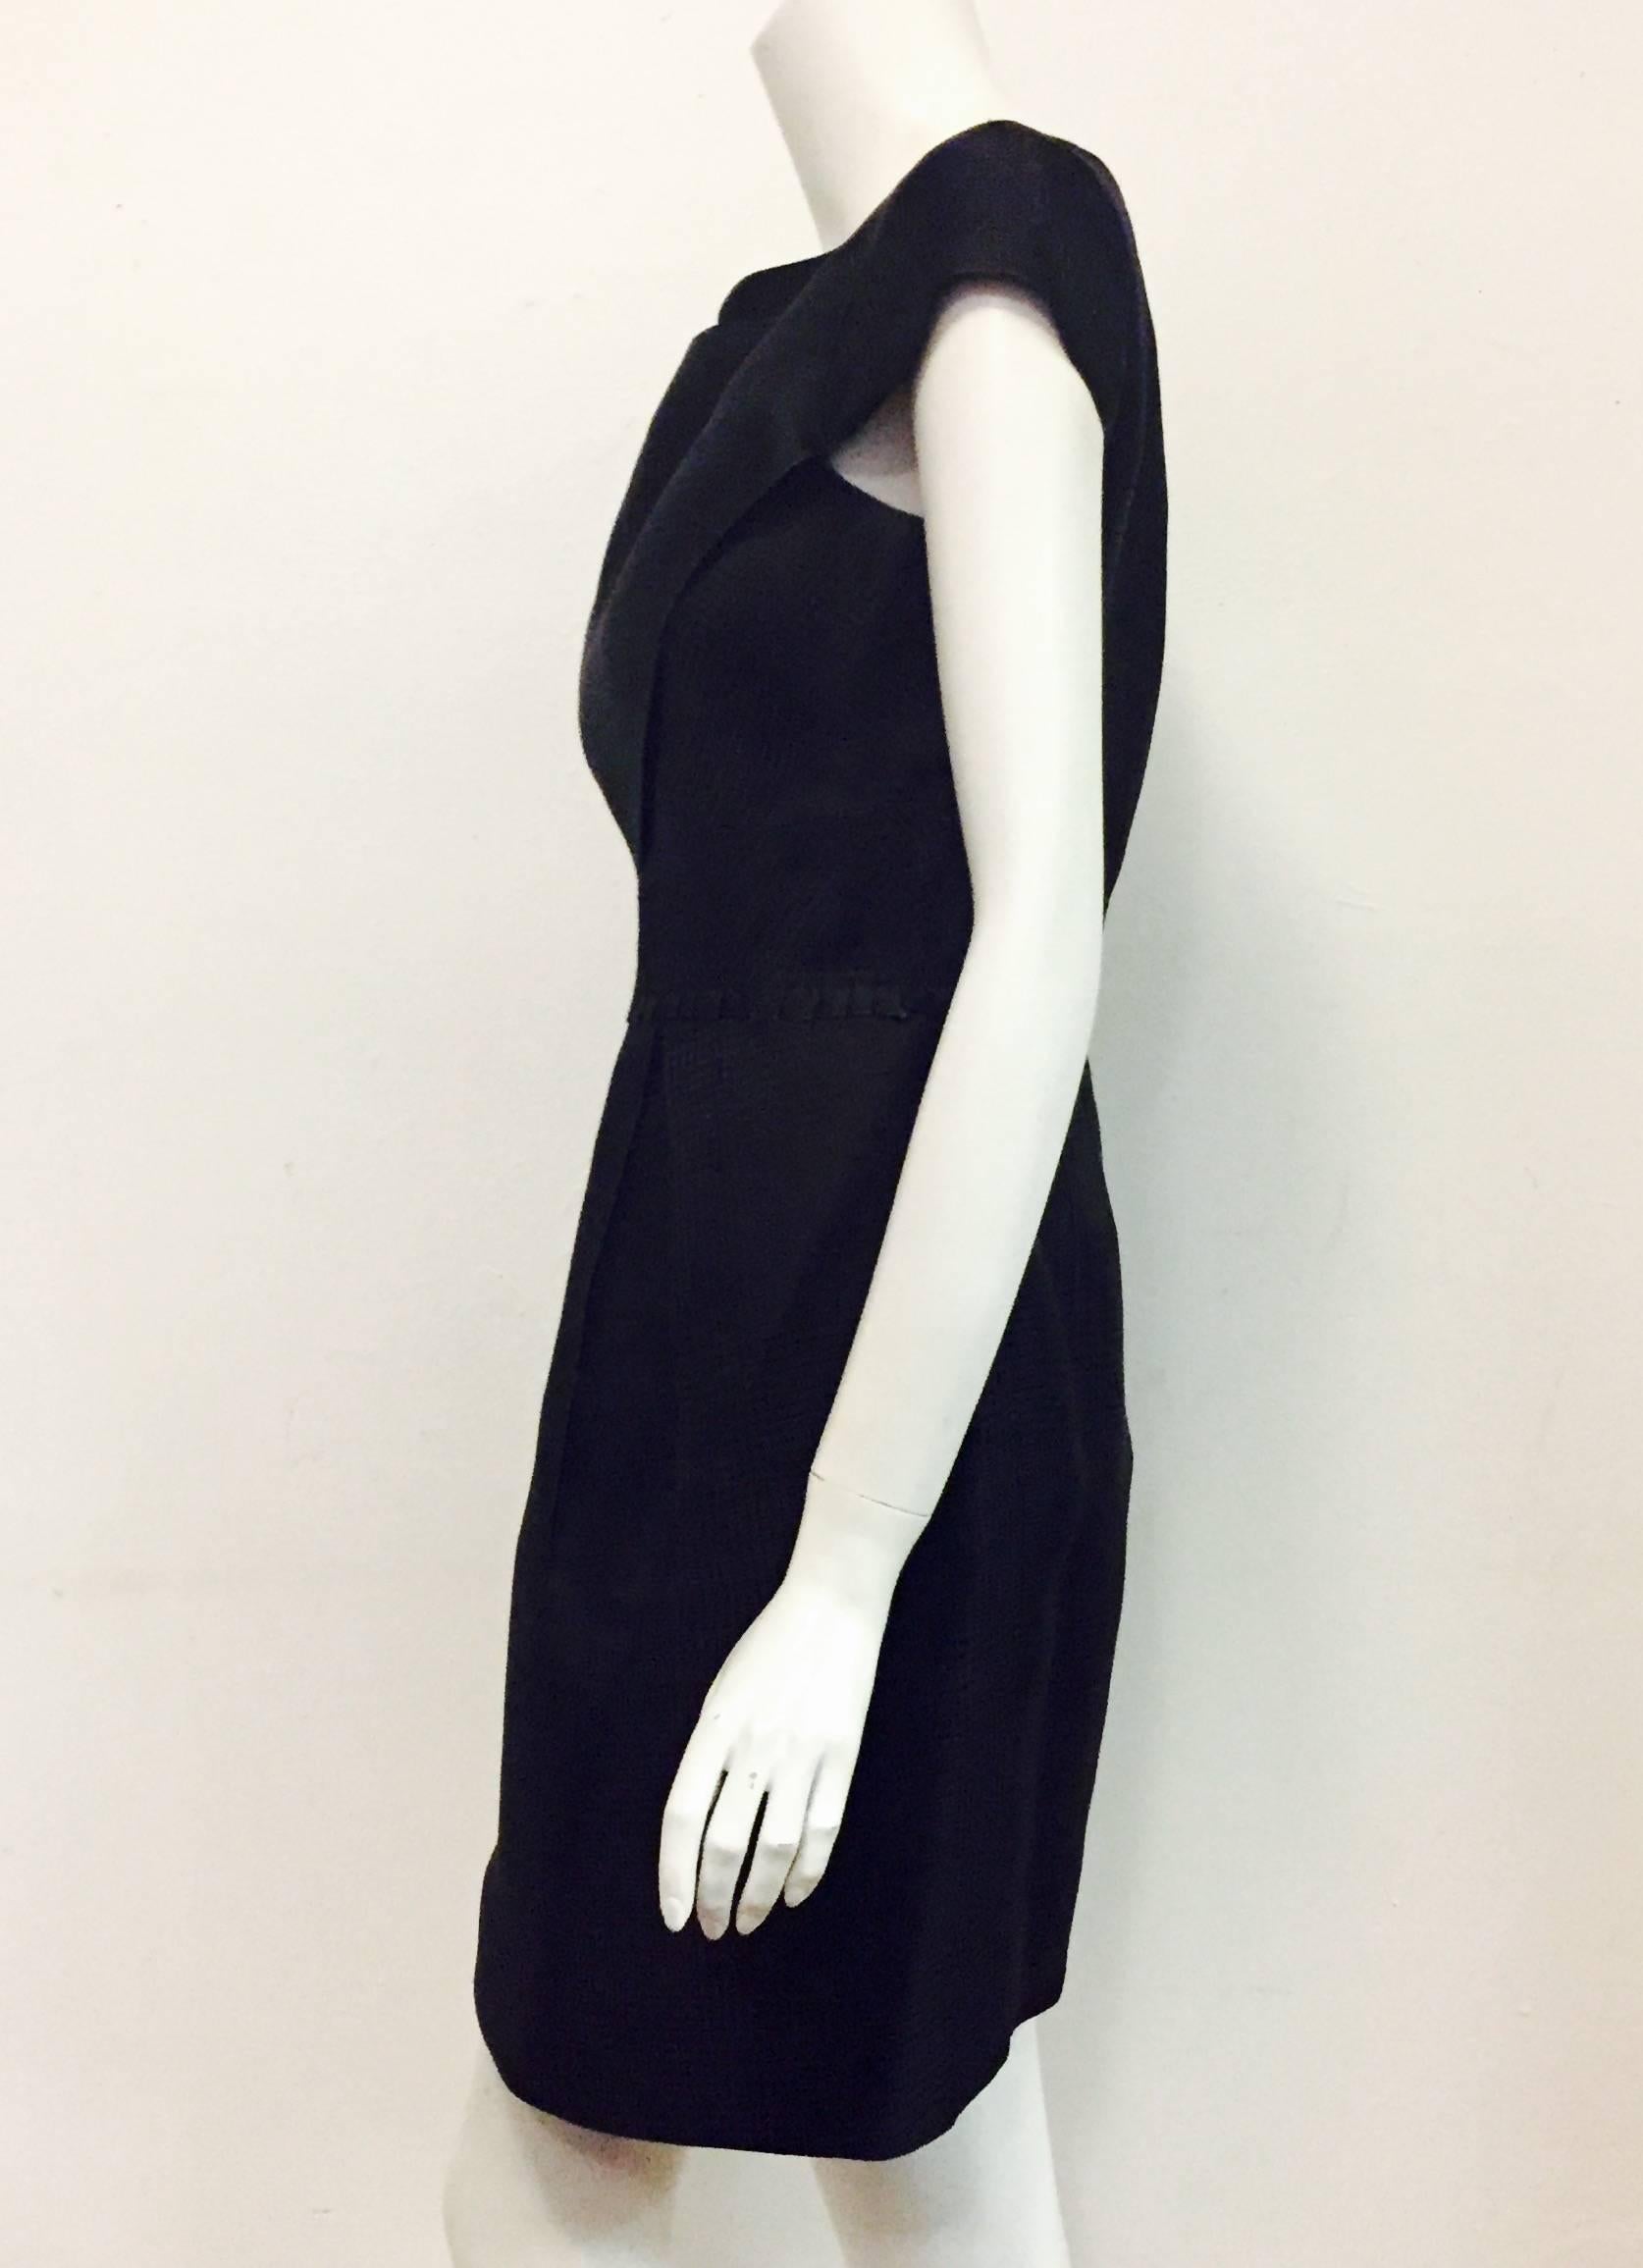 Sensational Zac Posen Grey Herringbone Pattern Cap Sleeve Dress In Excellent Condition For Sale In Palm Beach, FL